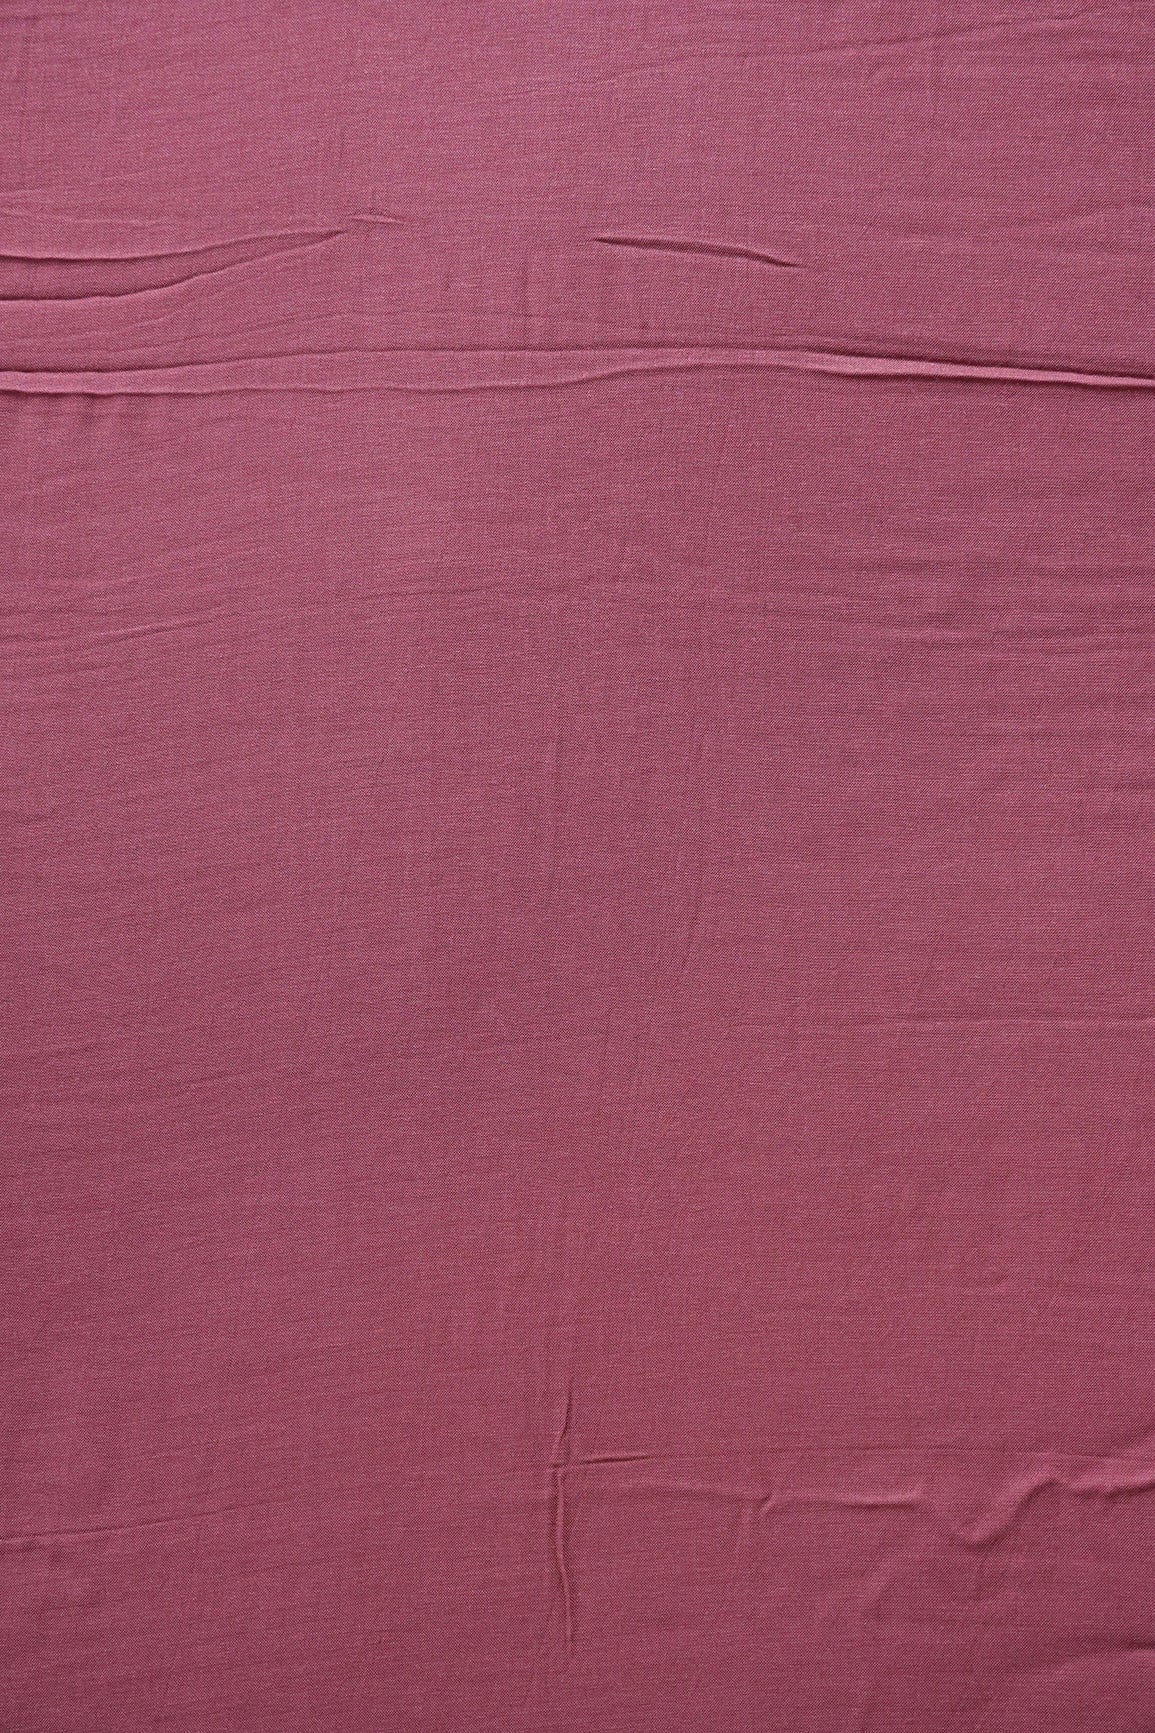 doeraa Plain Fabrics Onion Pink Dyed Muslin Fabric